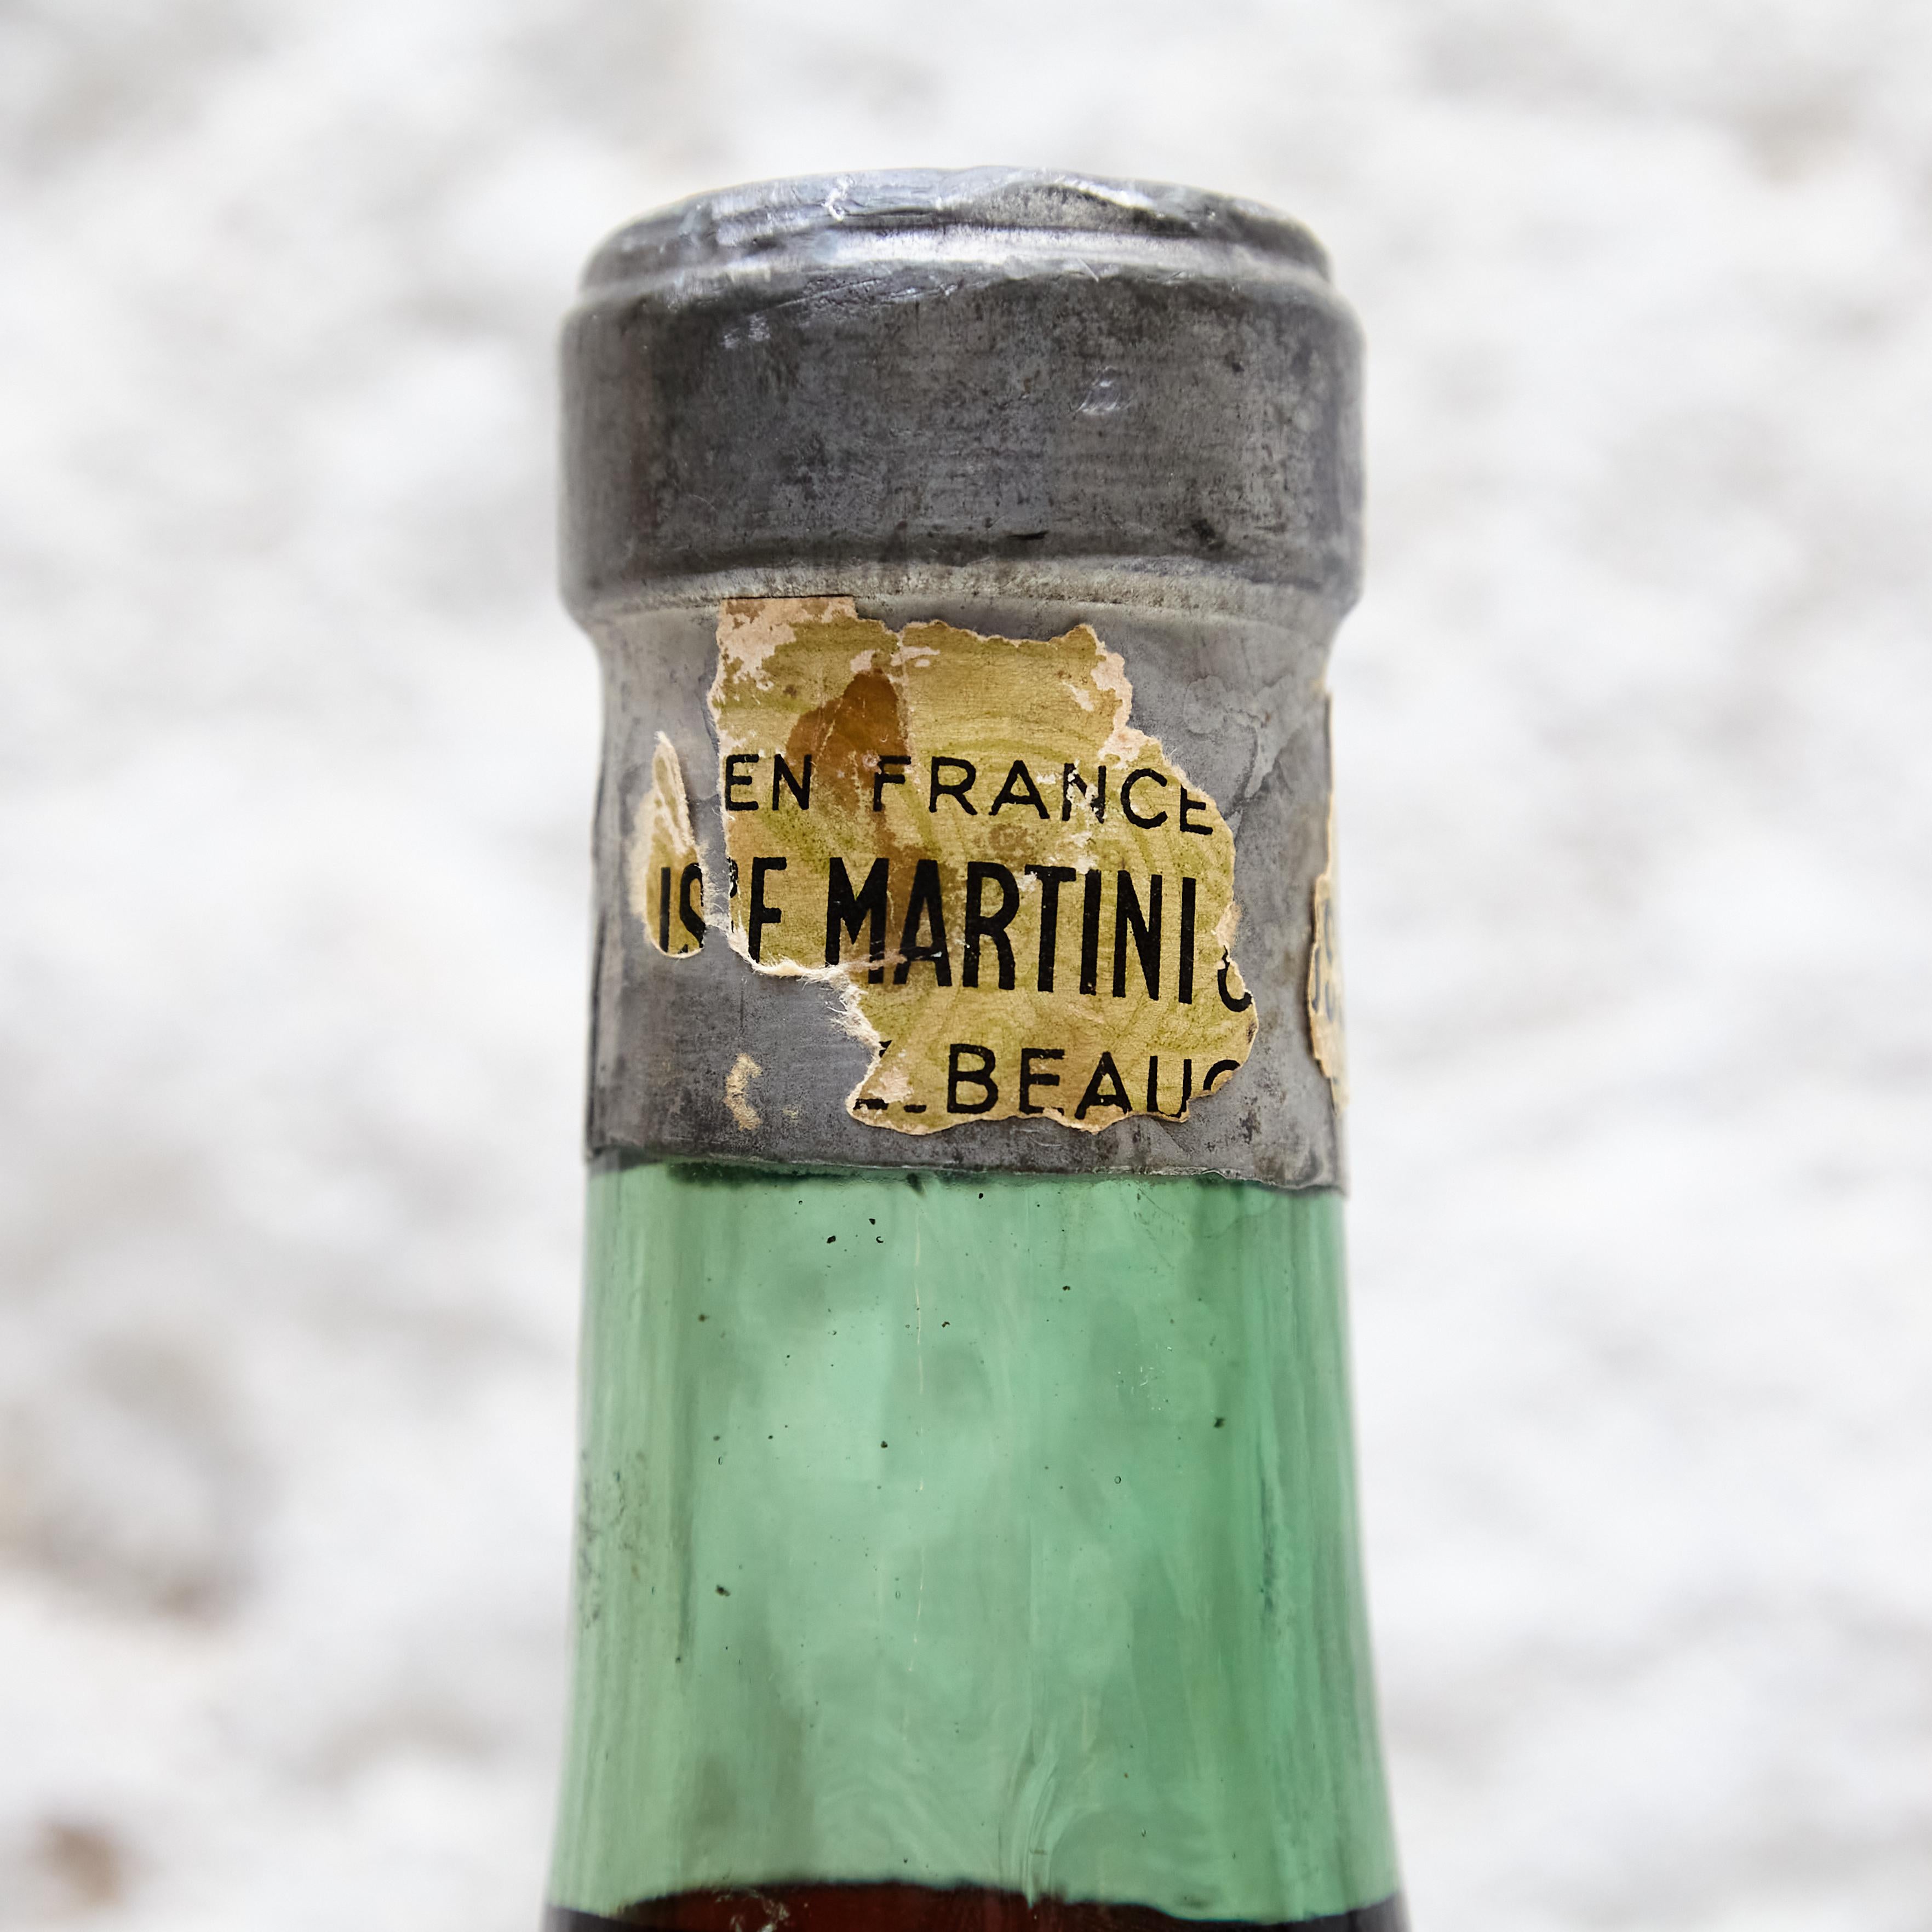 1940 bottle